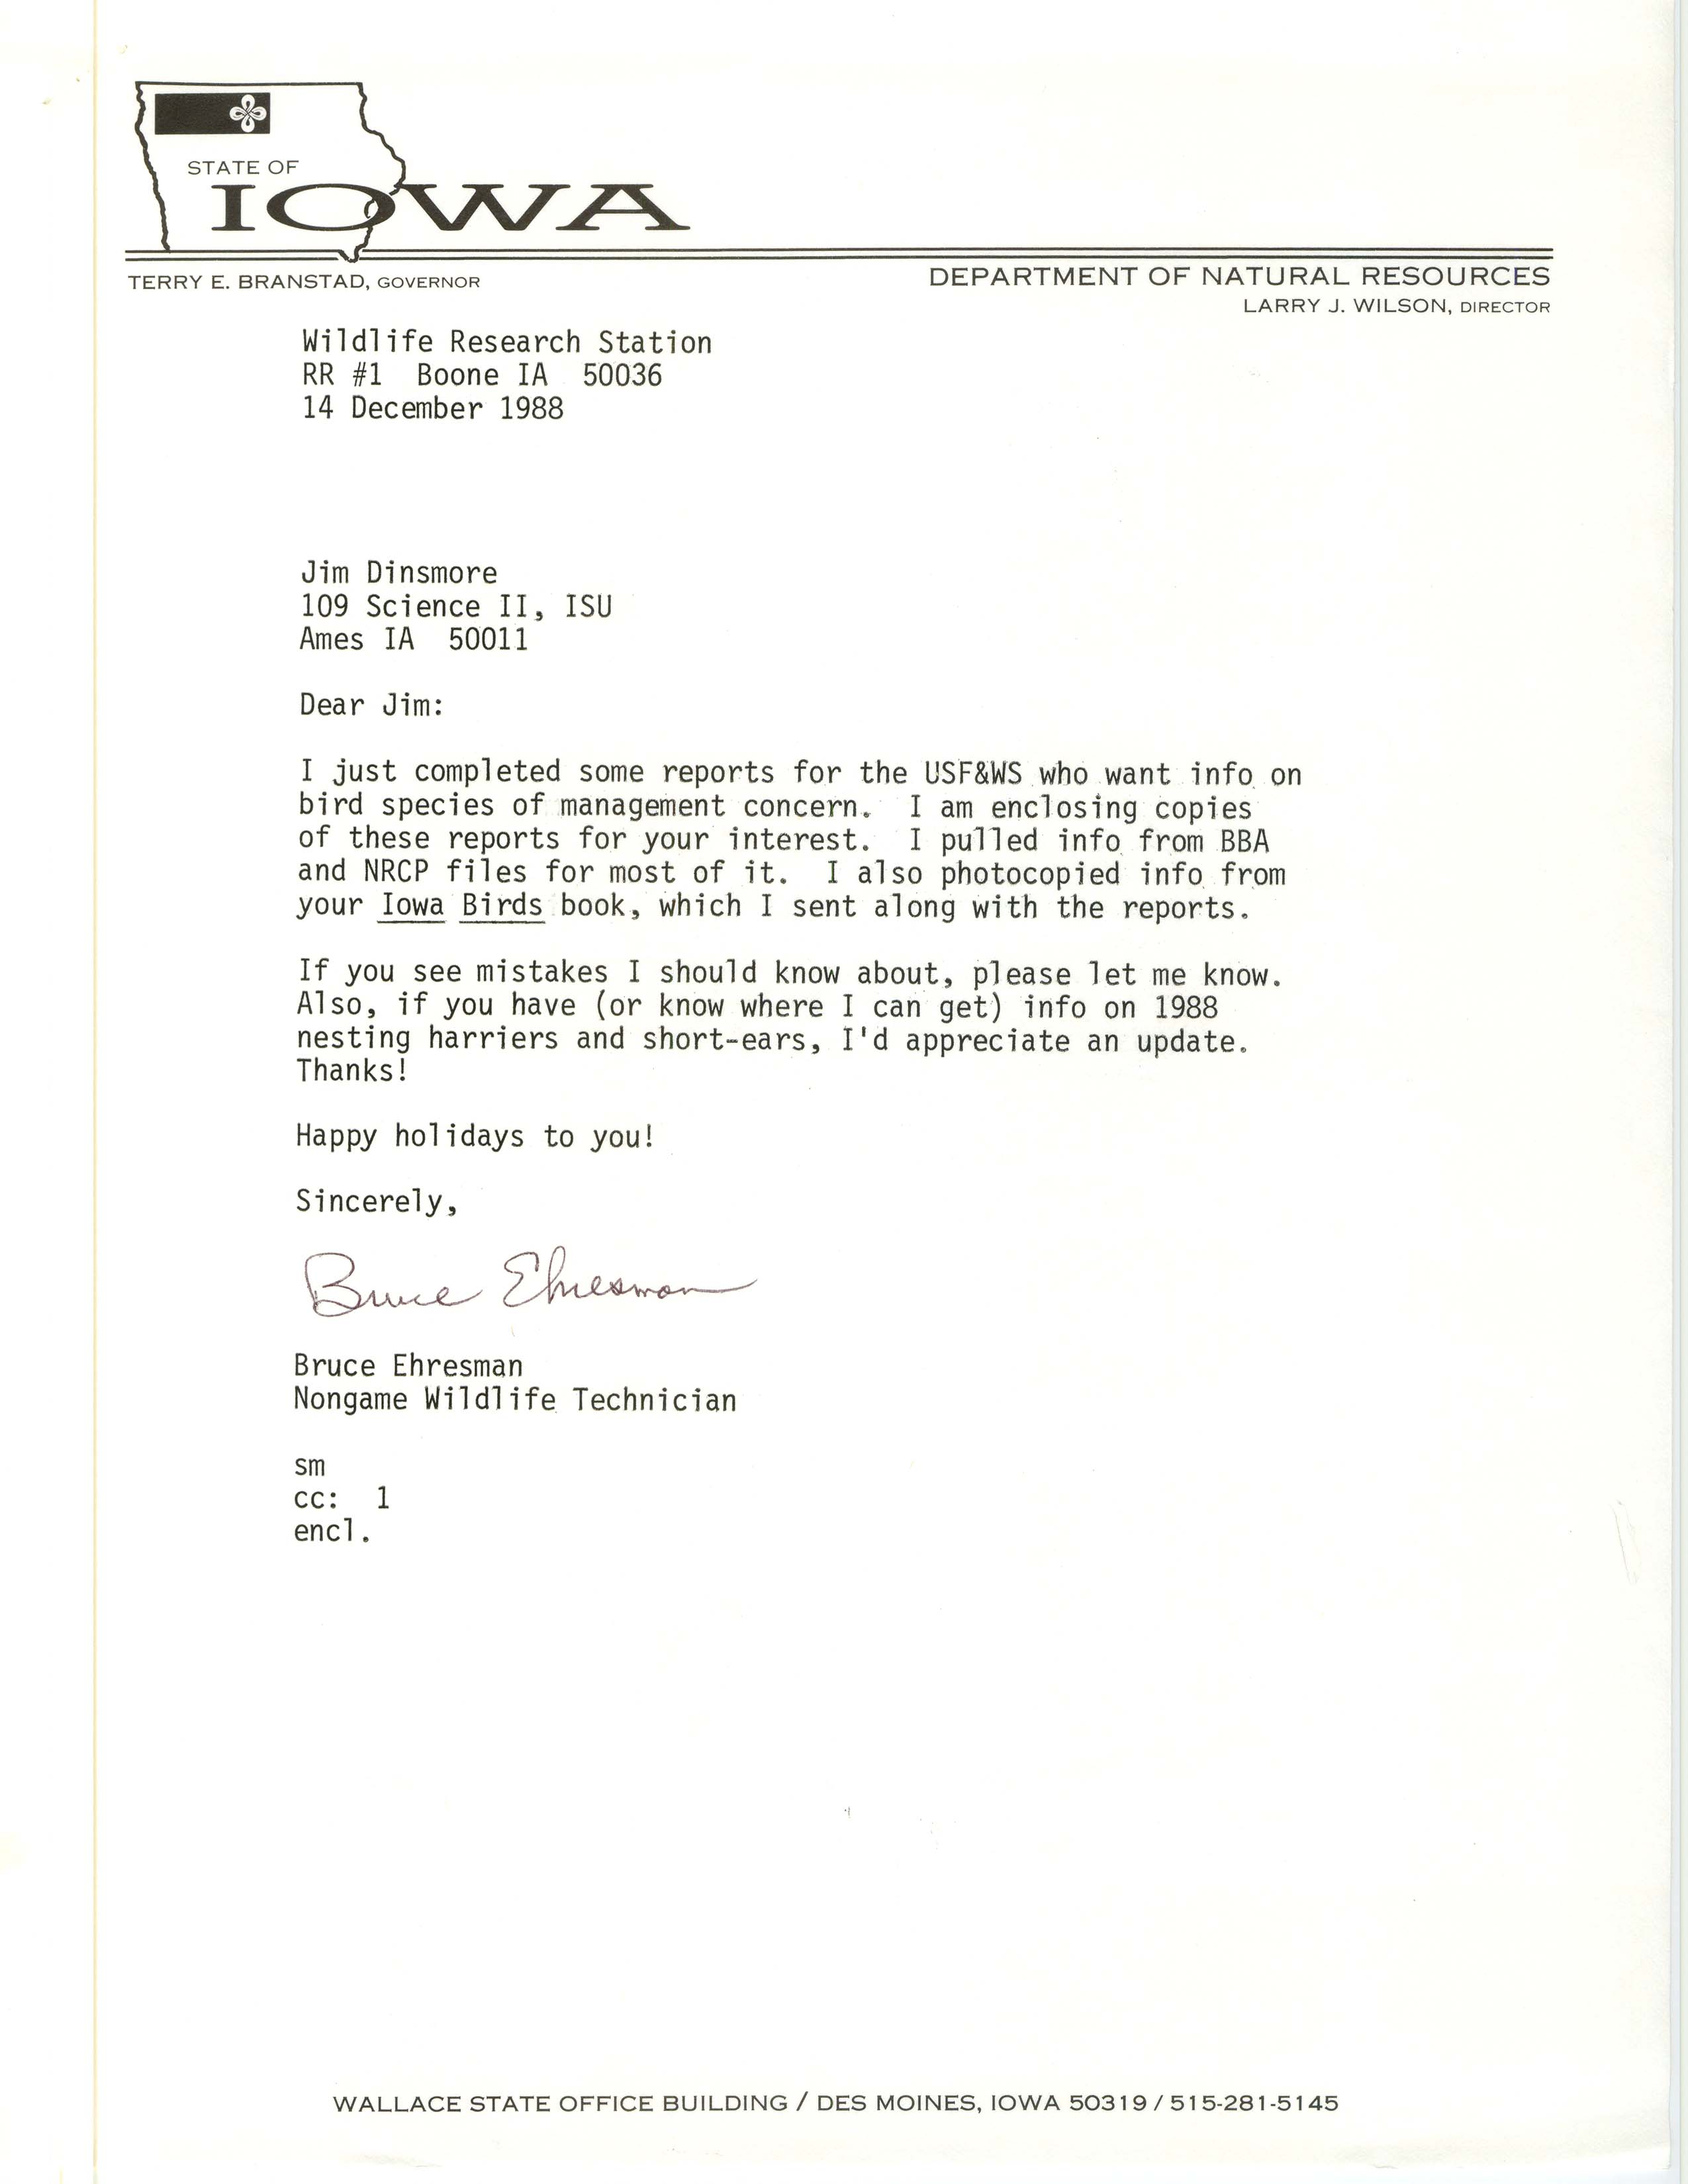 Bruce Ehresman letter to James J. Dinsmore regarding U.S. Fish and Wildlife Service reports, December 14, 1988